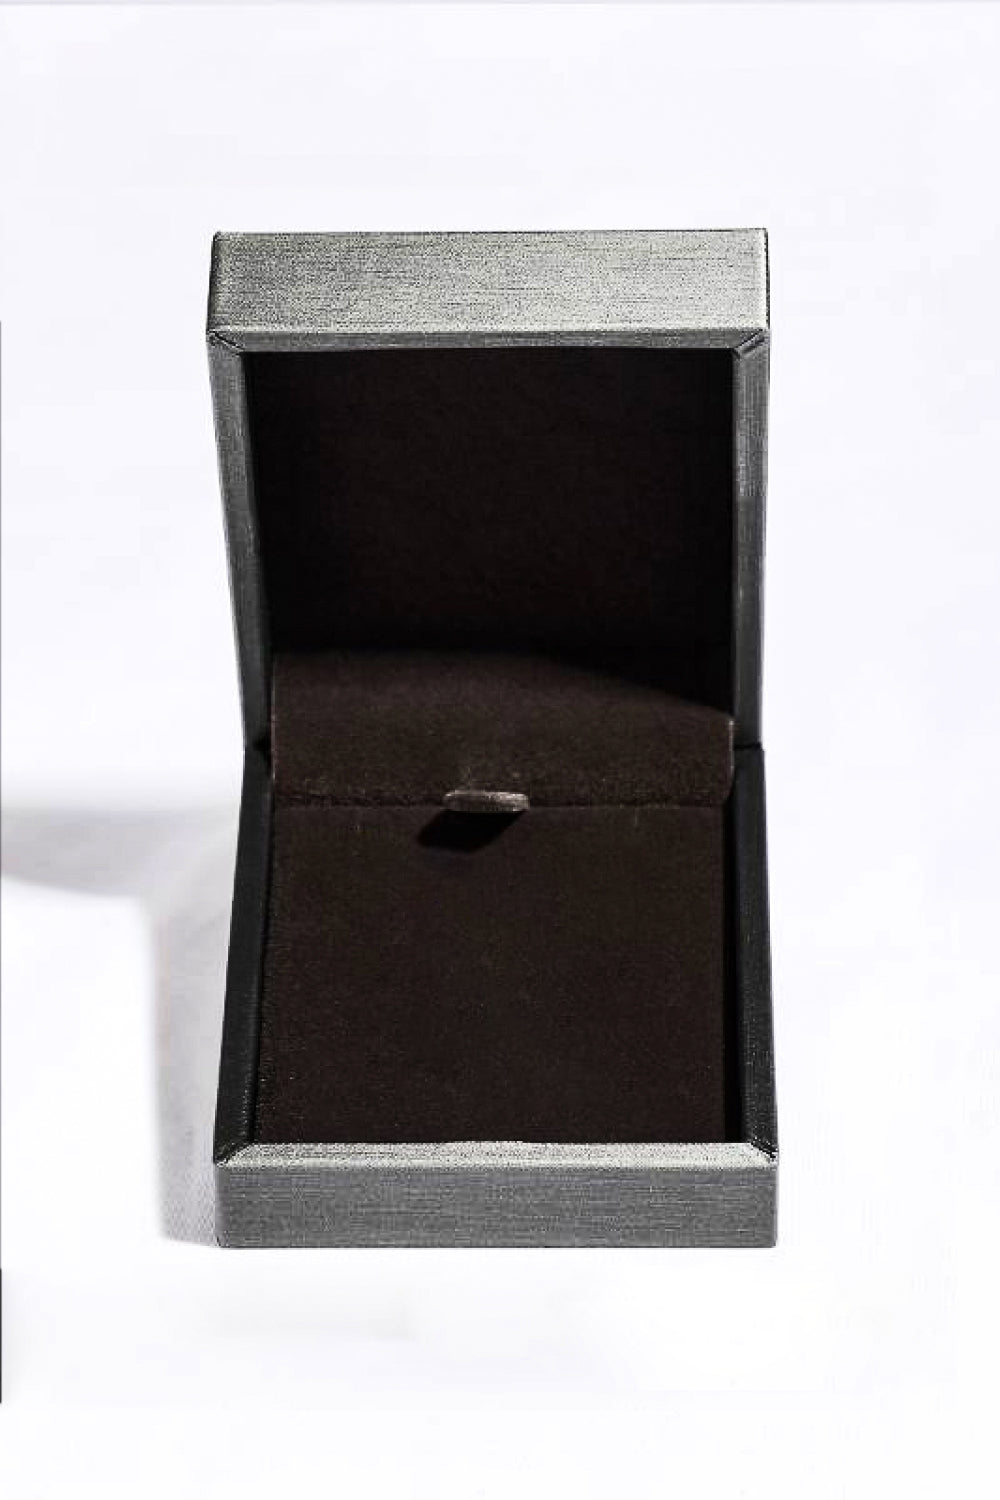 Key Pendant Necklace   0.5 carat Moissanite Women's Fine Jewelry